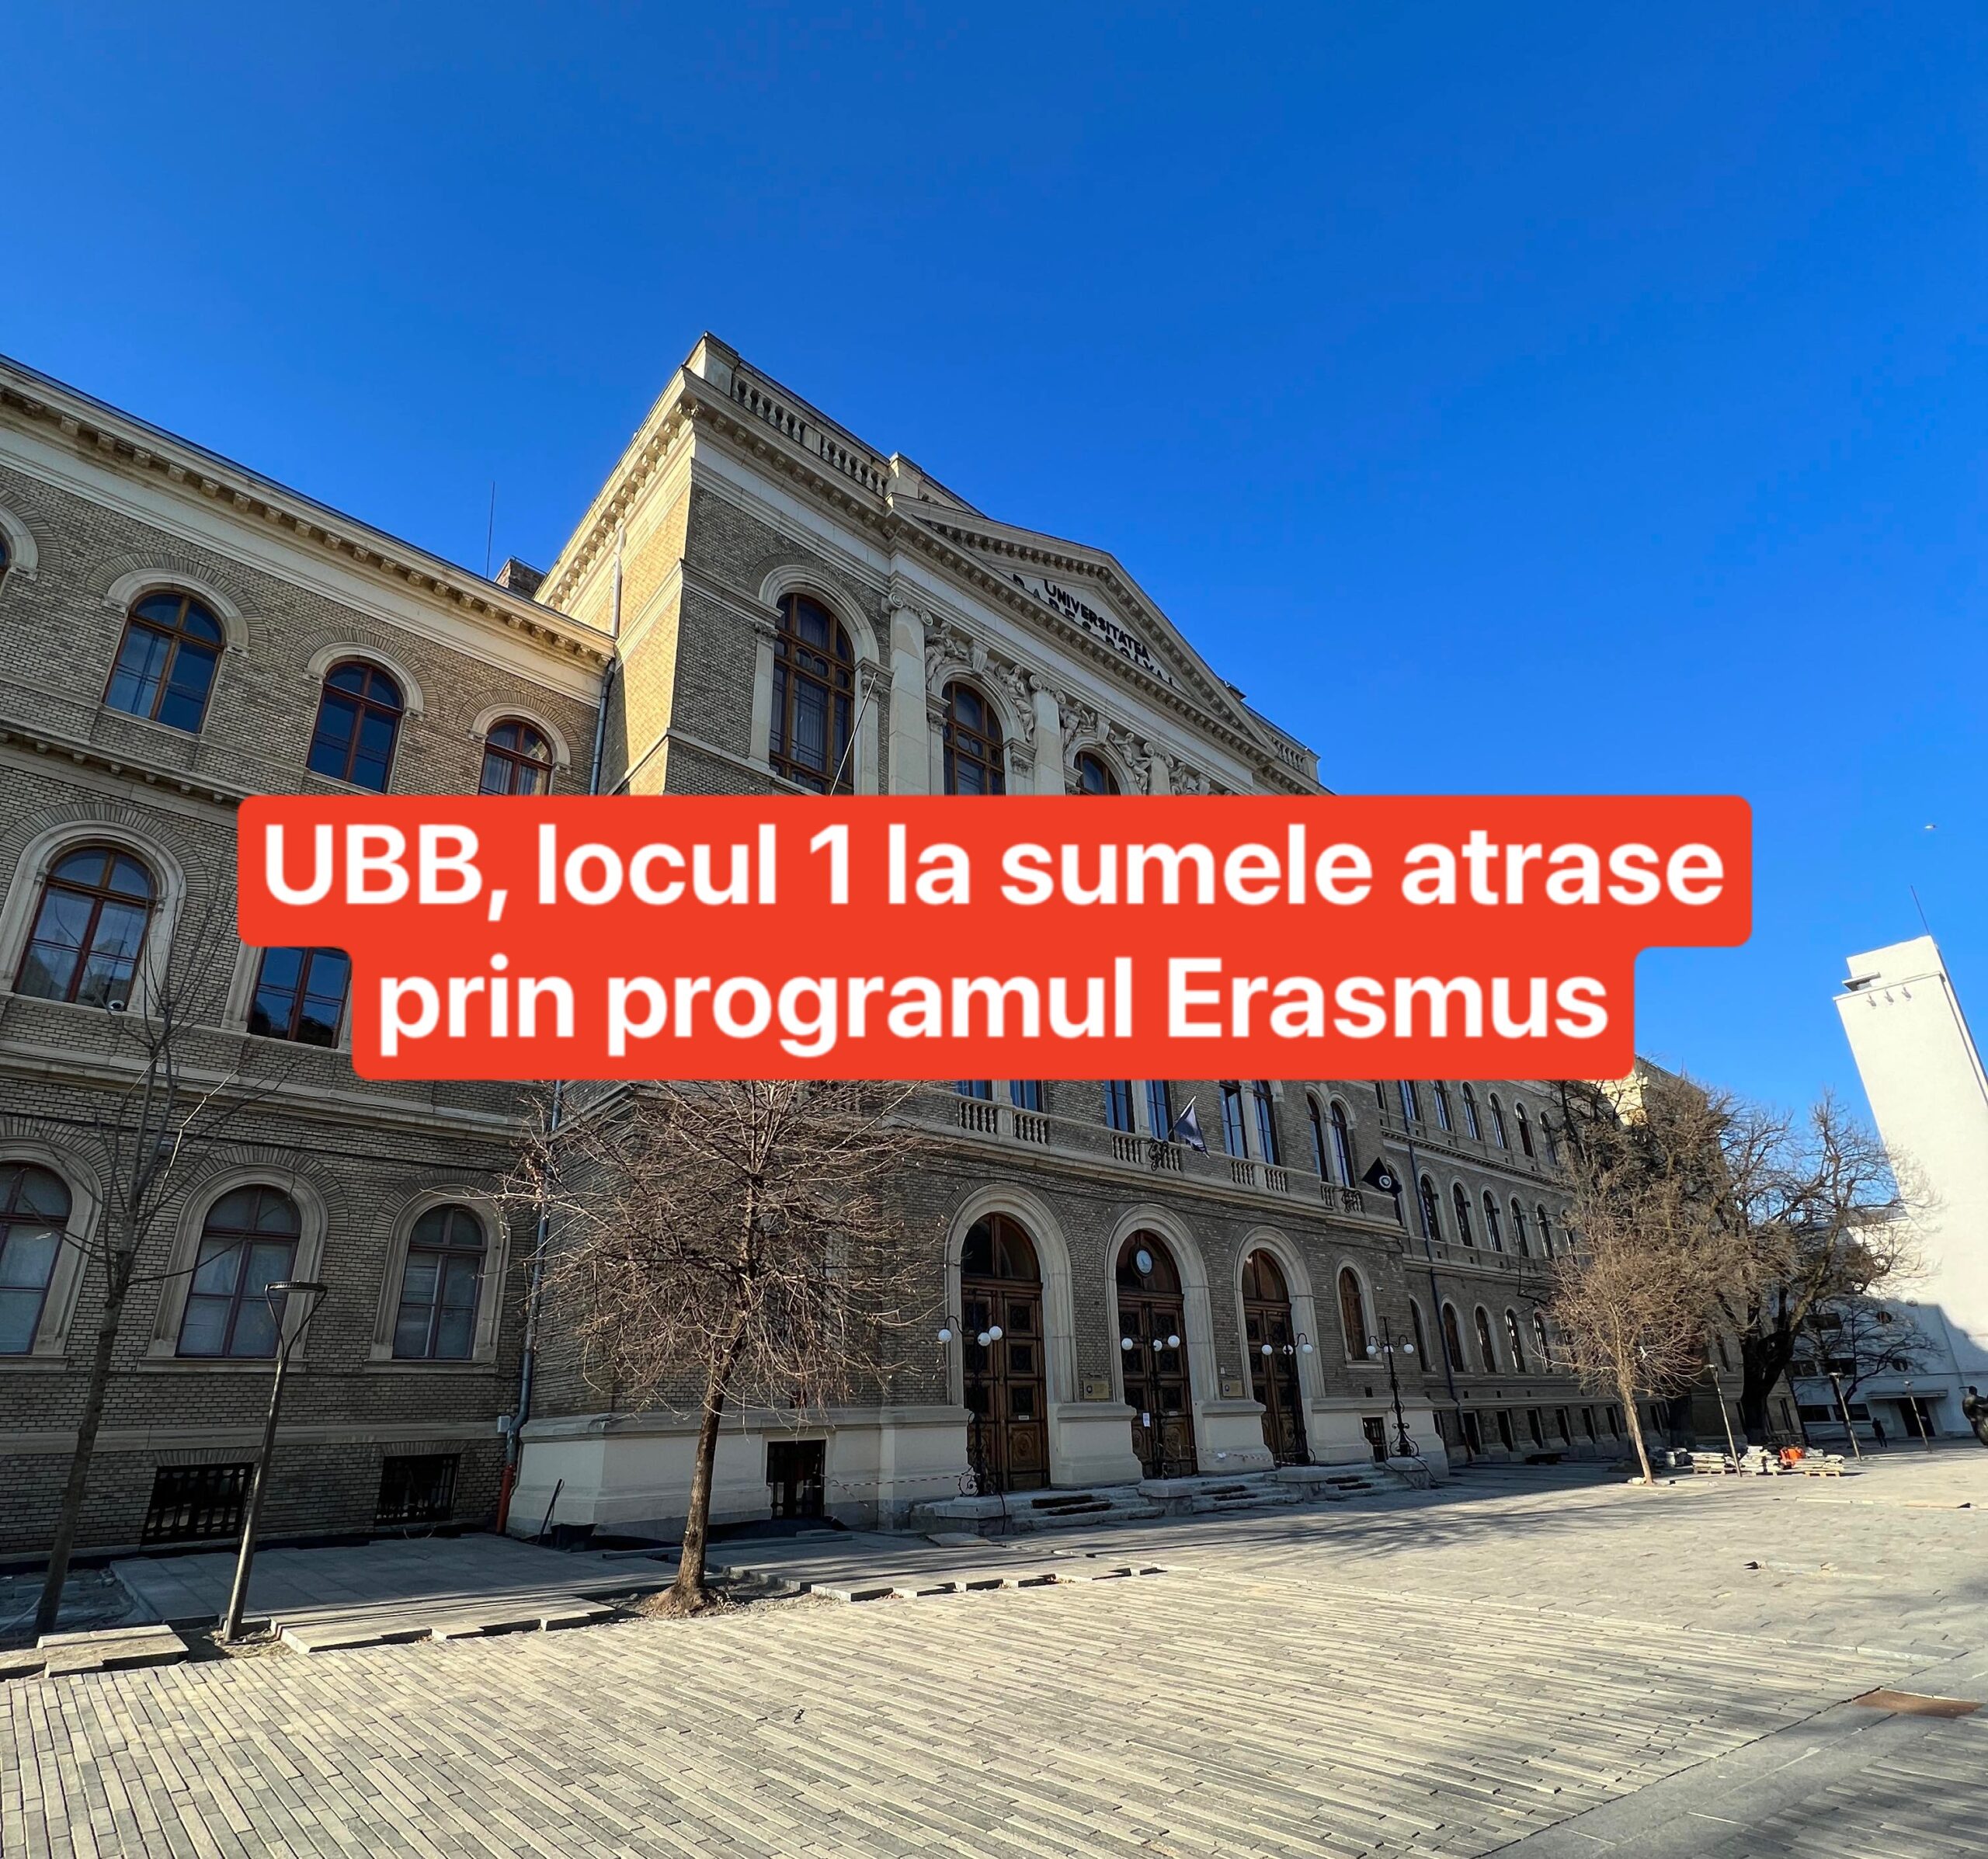 UBB locul 1 in Romania la sumele atrase prin programul Erasmus.